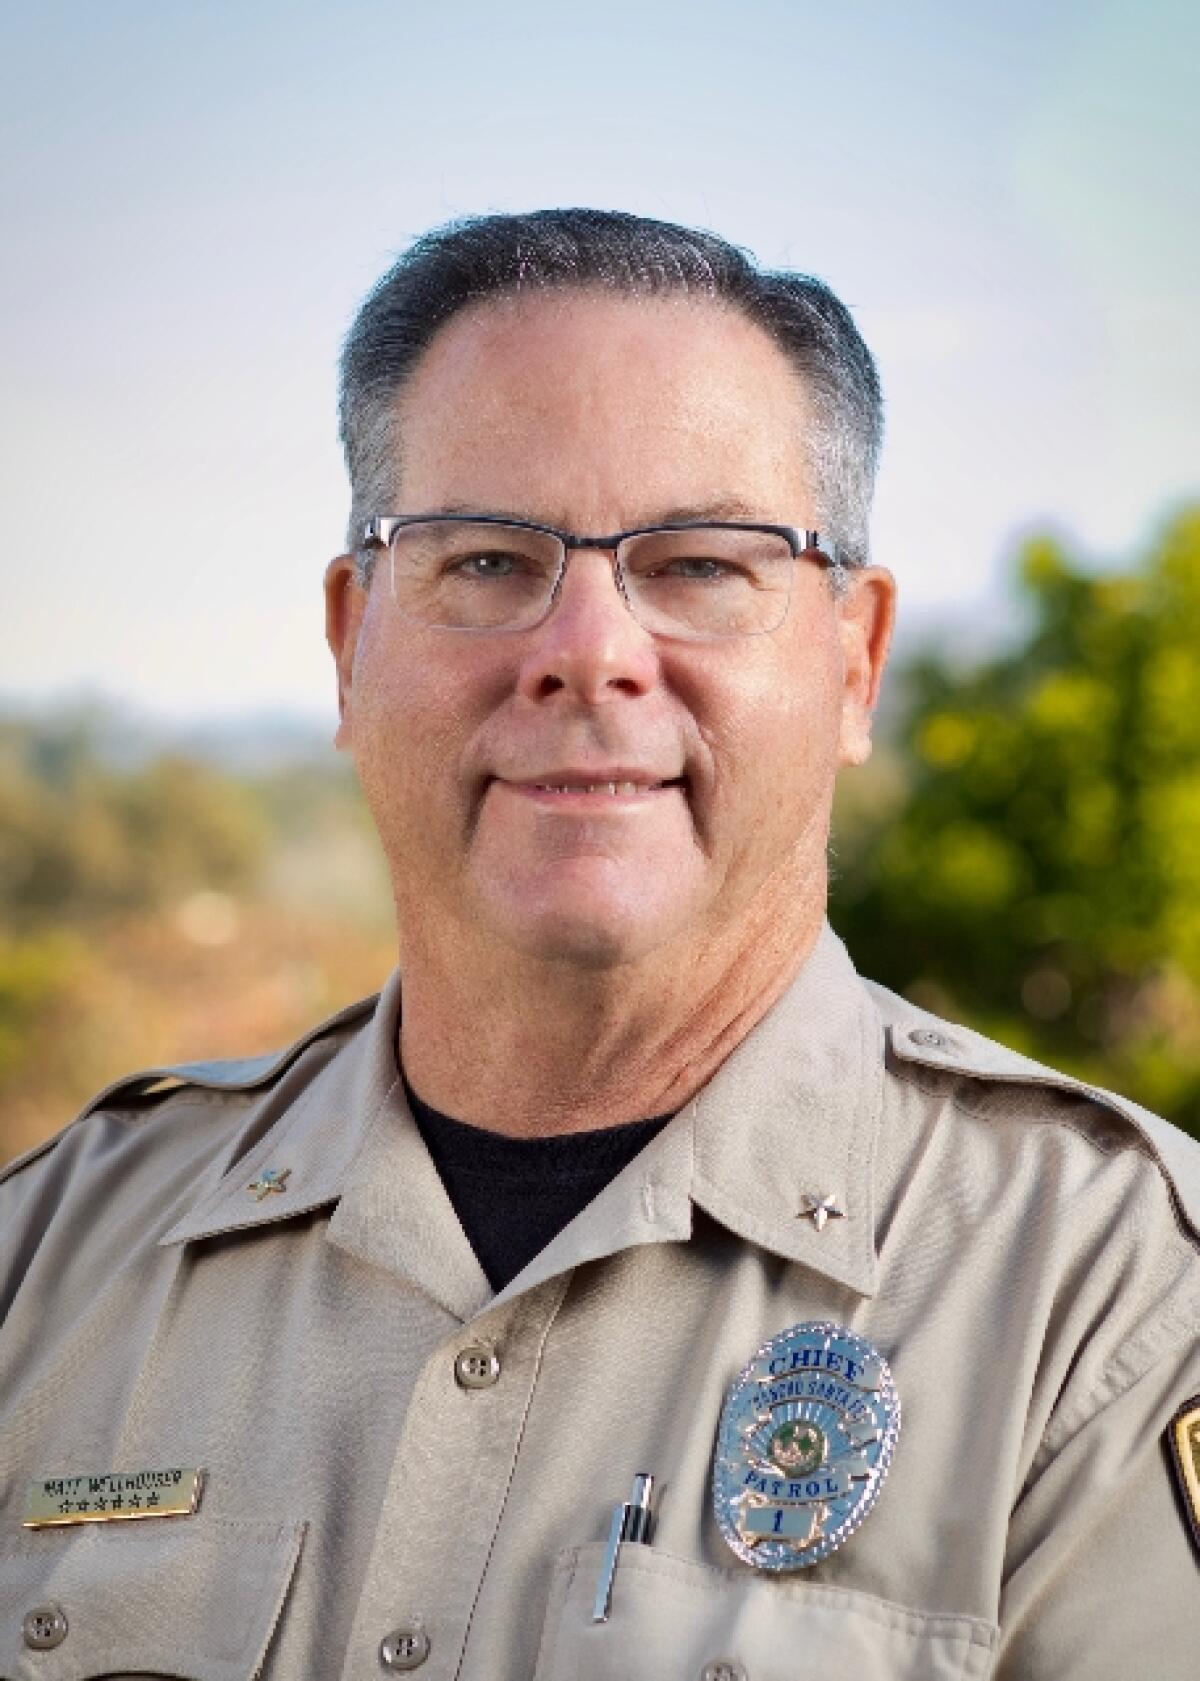 Rancho Santa Fe Patrol Chief Matt Wellhouser